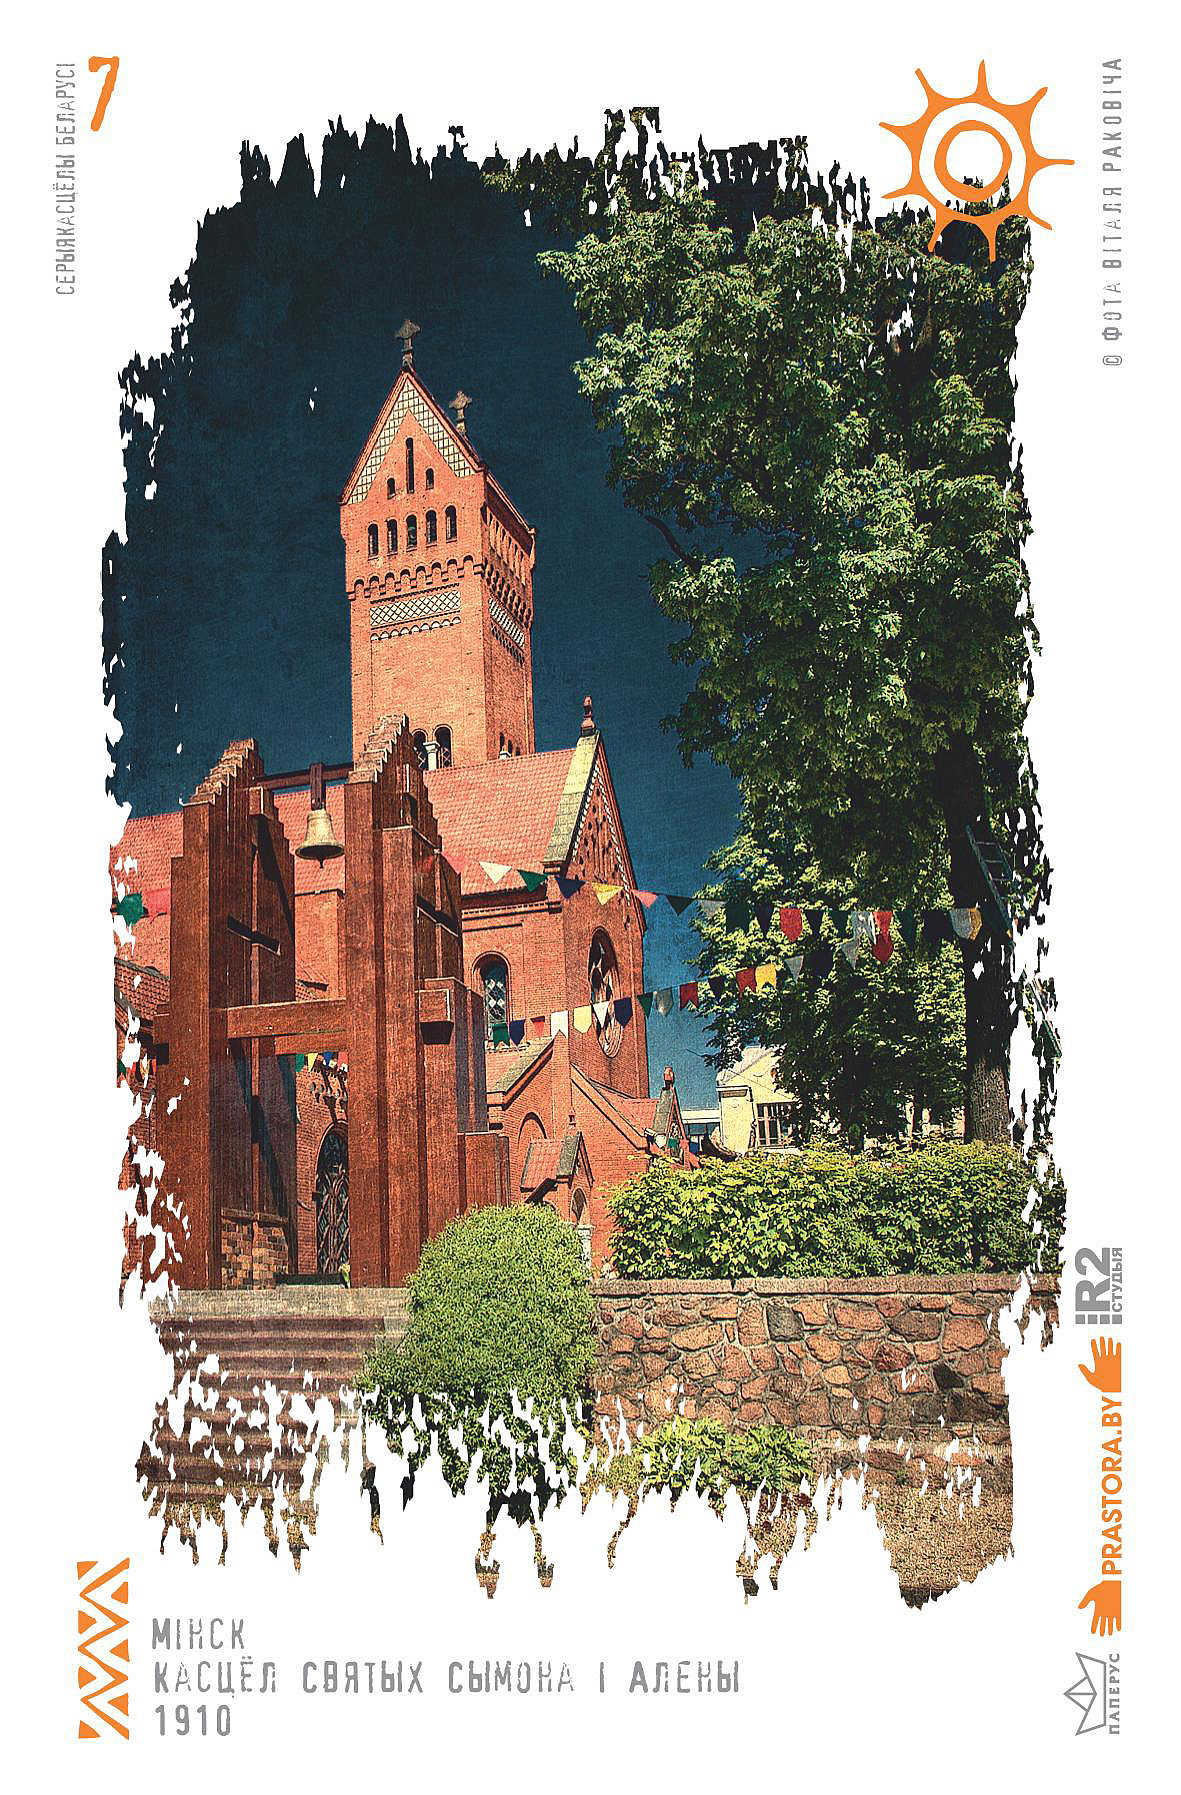 belarus church history postcards